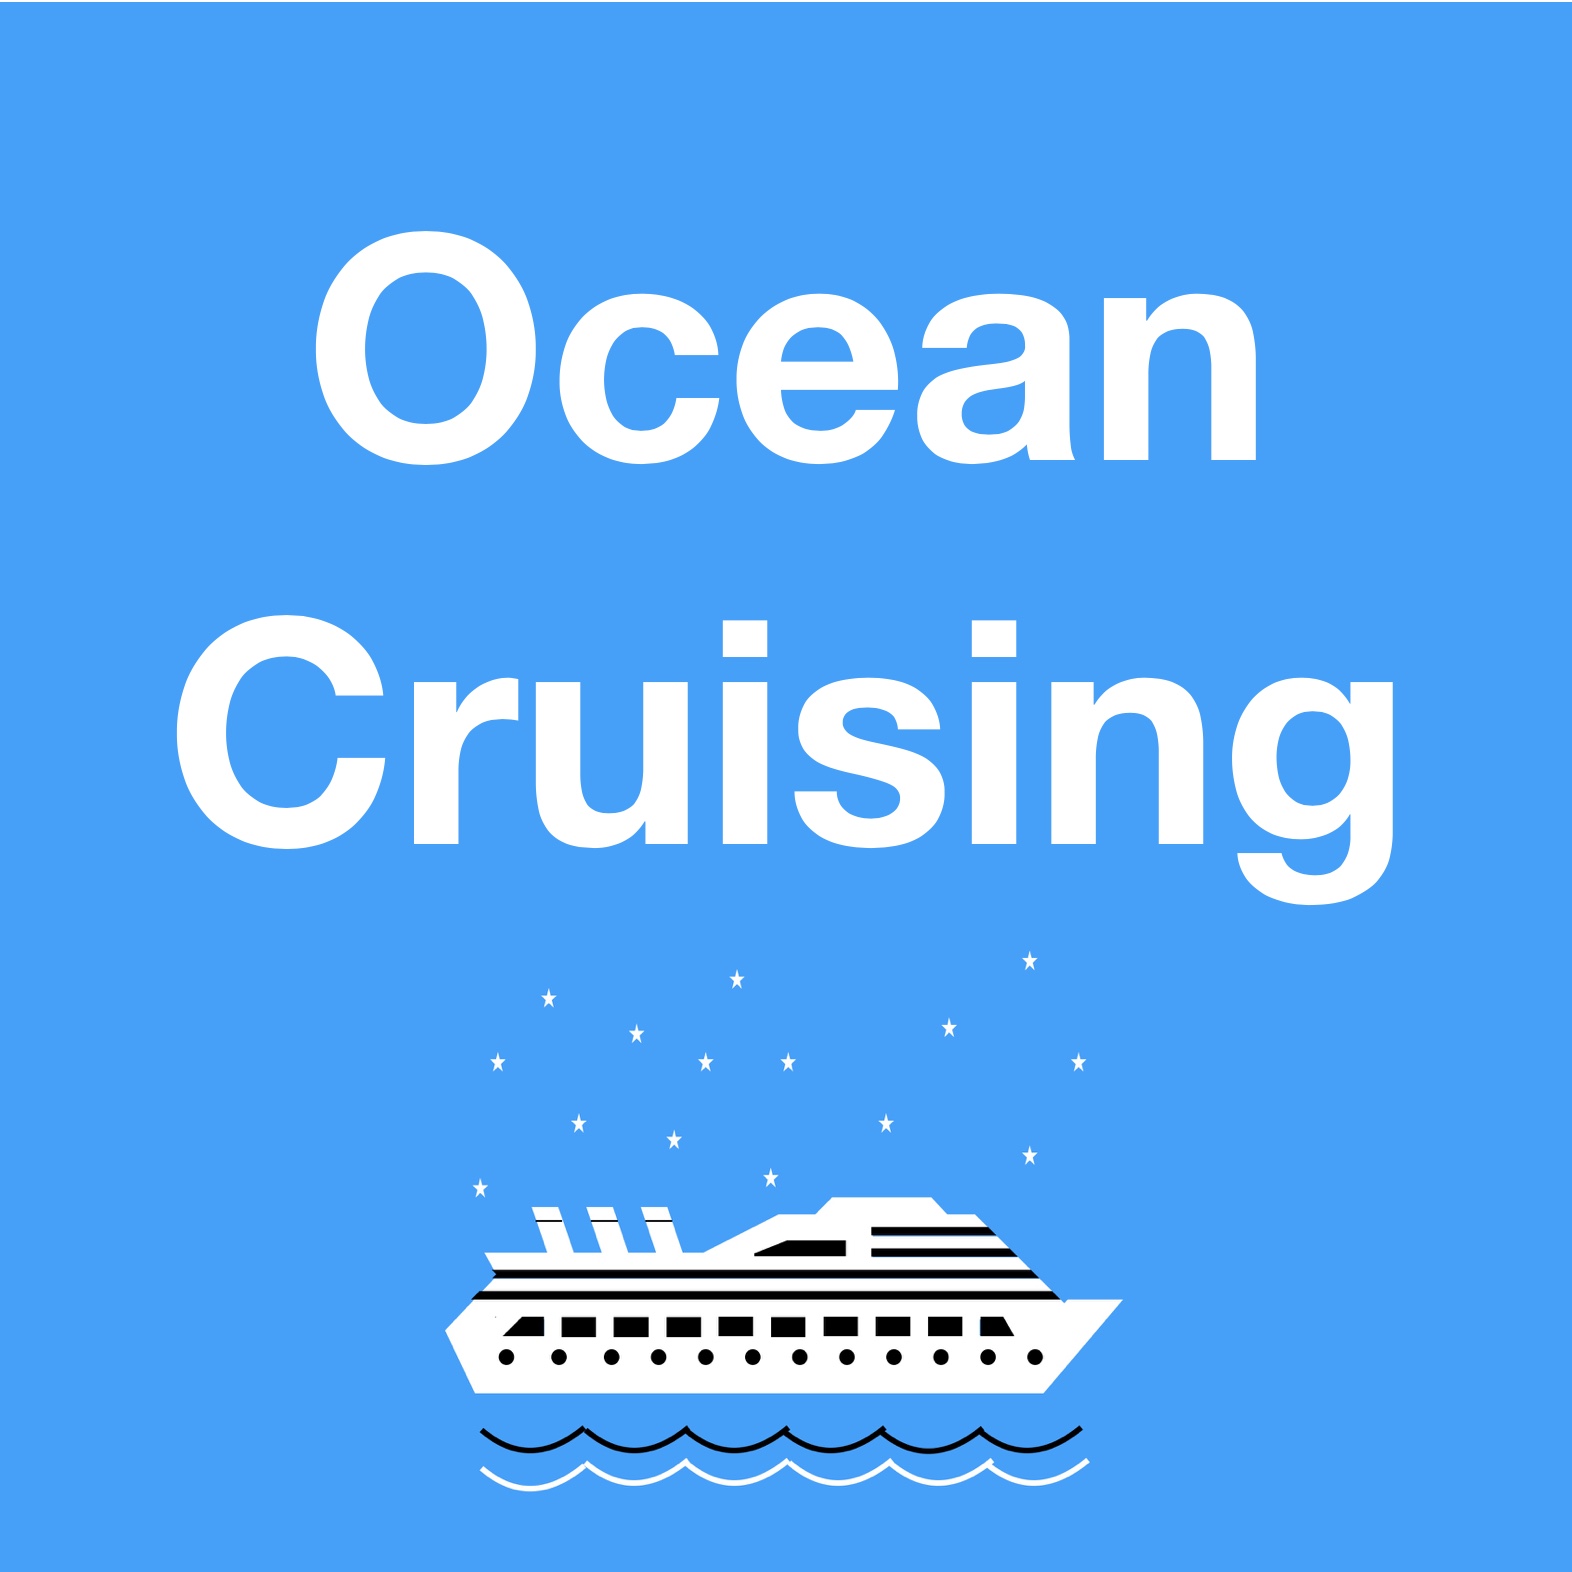 Ocean Cruising2 In Ocean Cruising